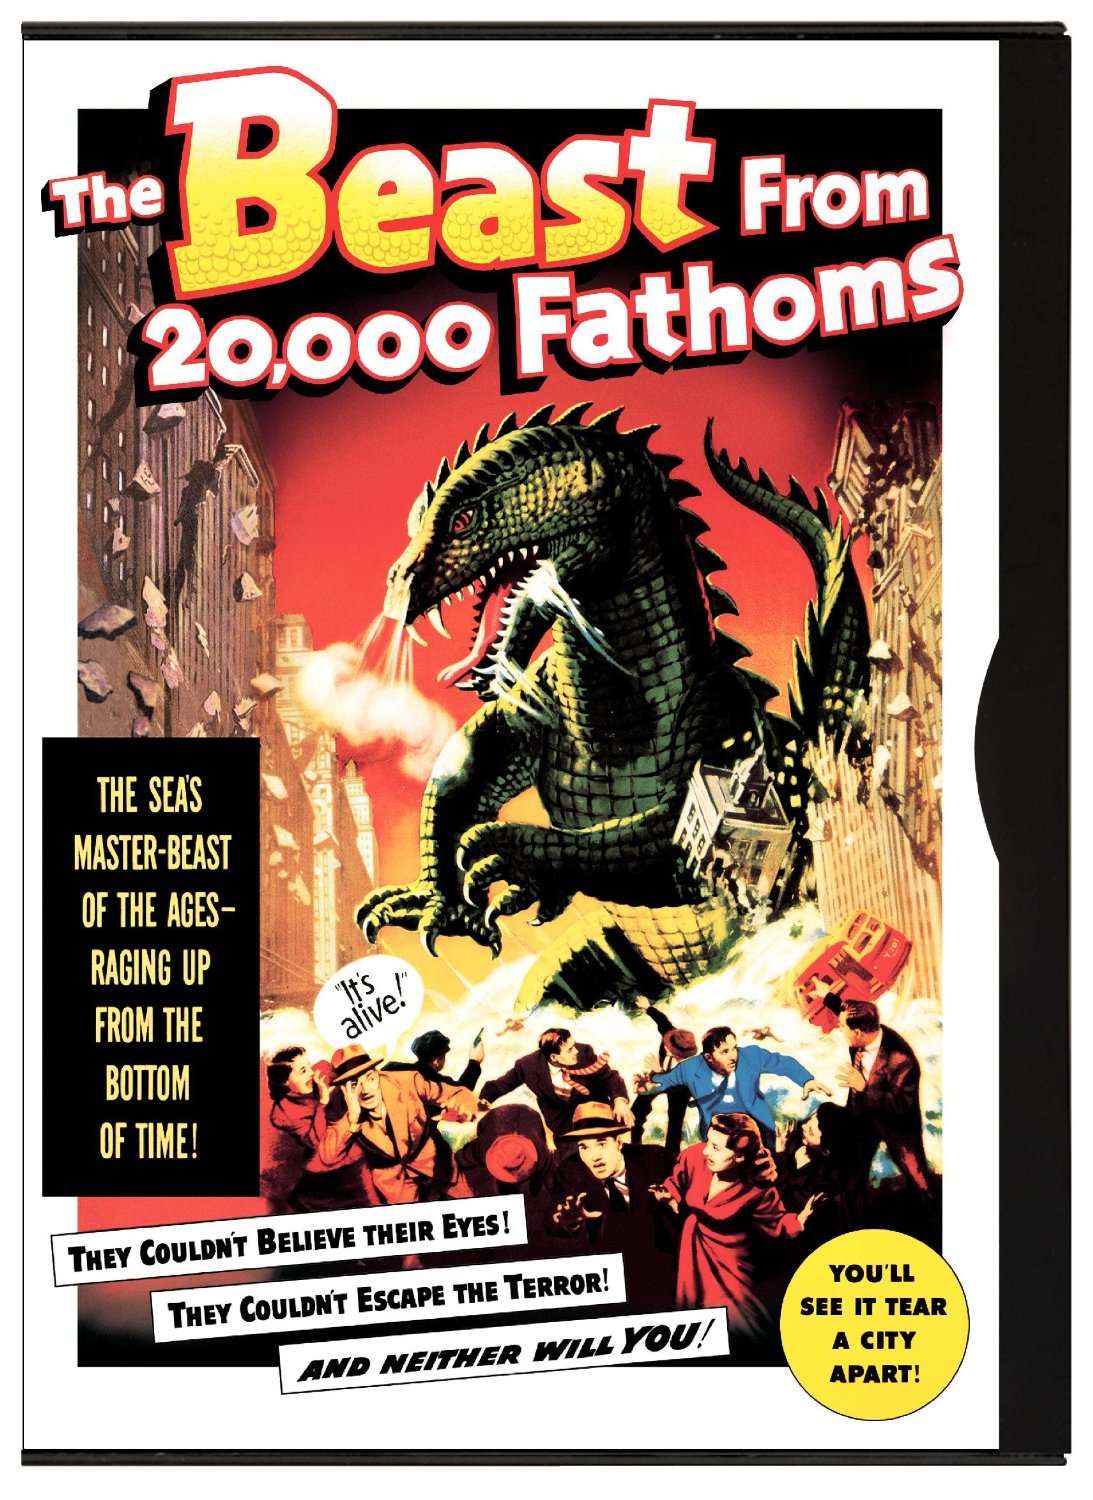 The Beast from 20,000 Fathoms (1953) starring Paul Hubschmid, Paula Raymond, Cecil Kellaway